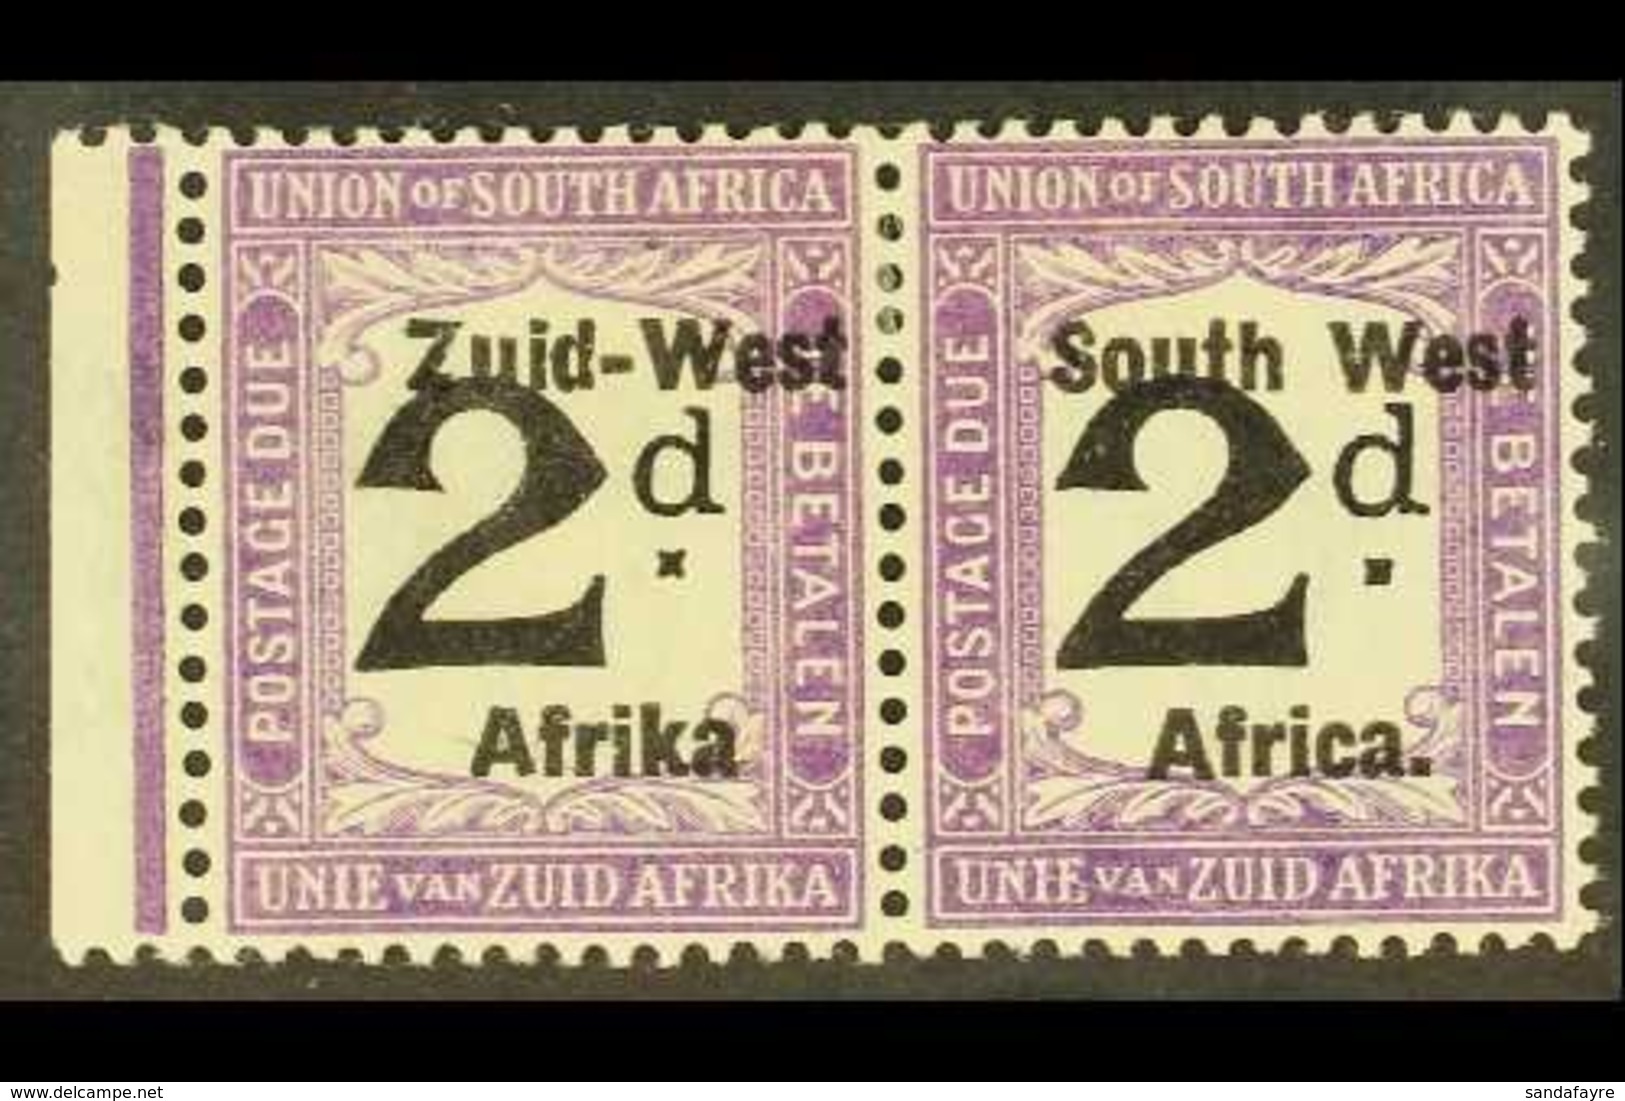 POSTAGE DUES 1923 2d Black & Violet Overprint Setting II 10mm Between Lines Of Overprint With "AFRIKA" WITHOUT STOP Vari - Afrique Du Sud-Ouest (1923-1990)